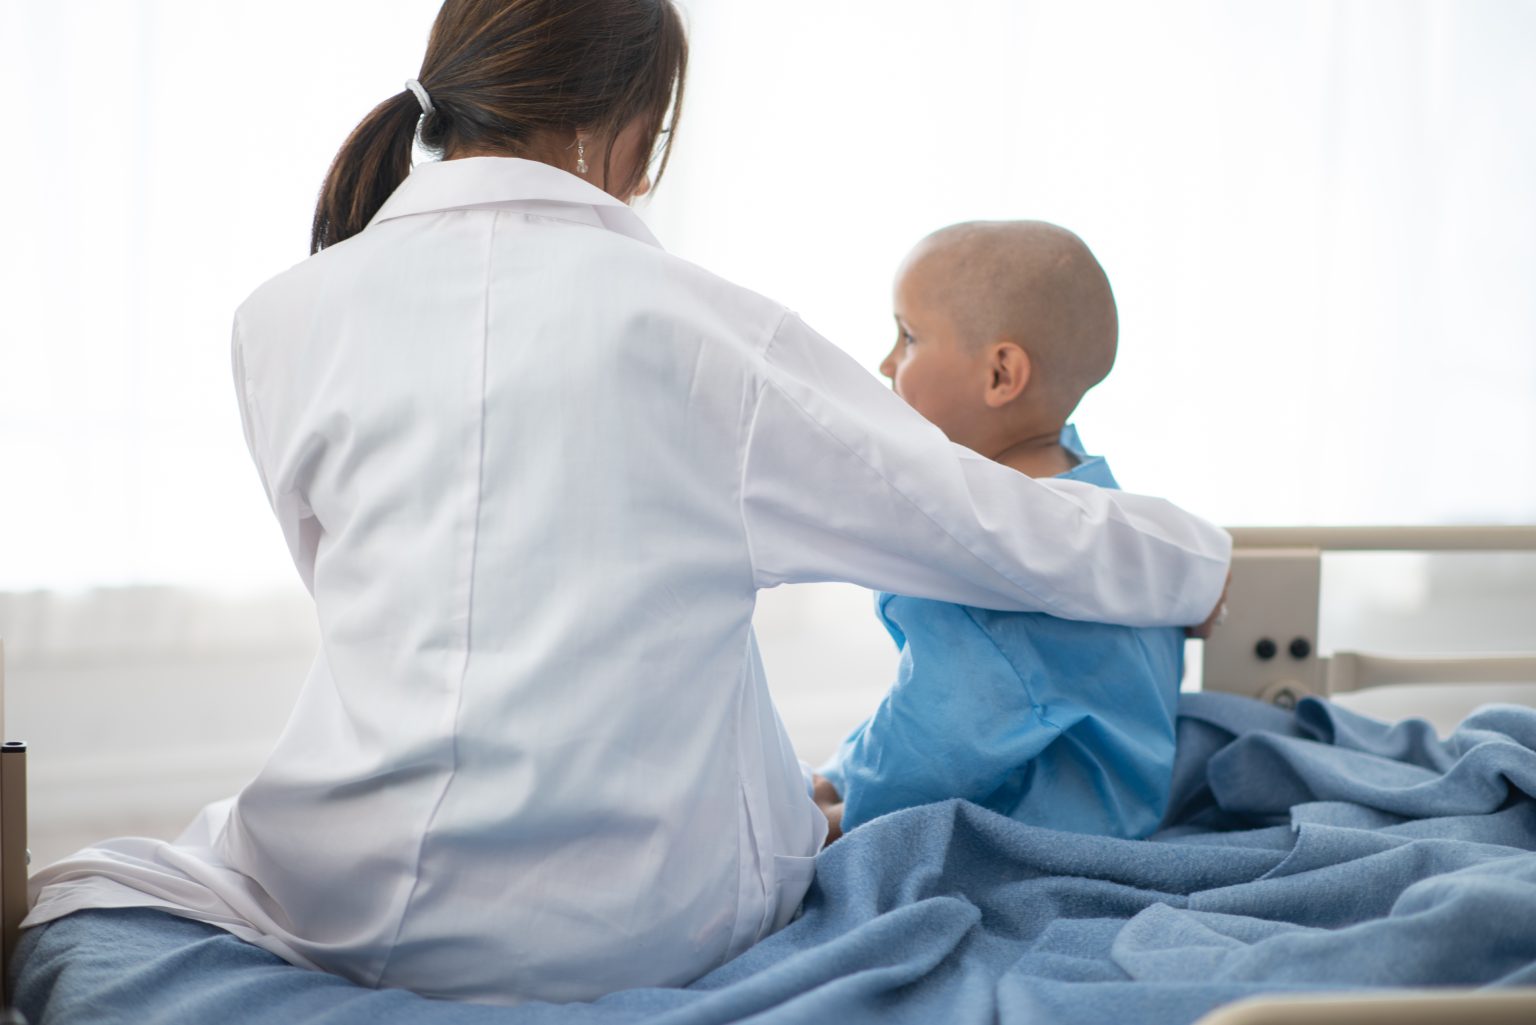 Pediatric Cancer Care Expansion